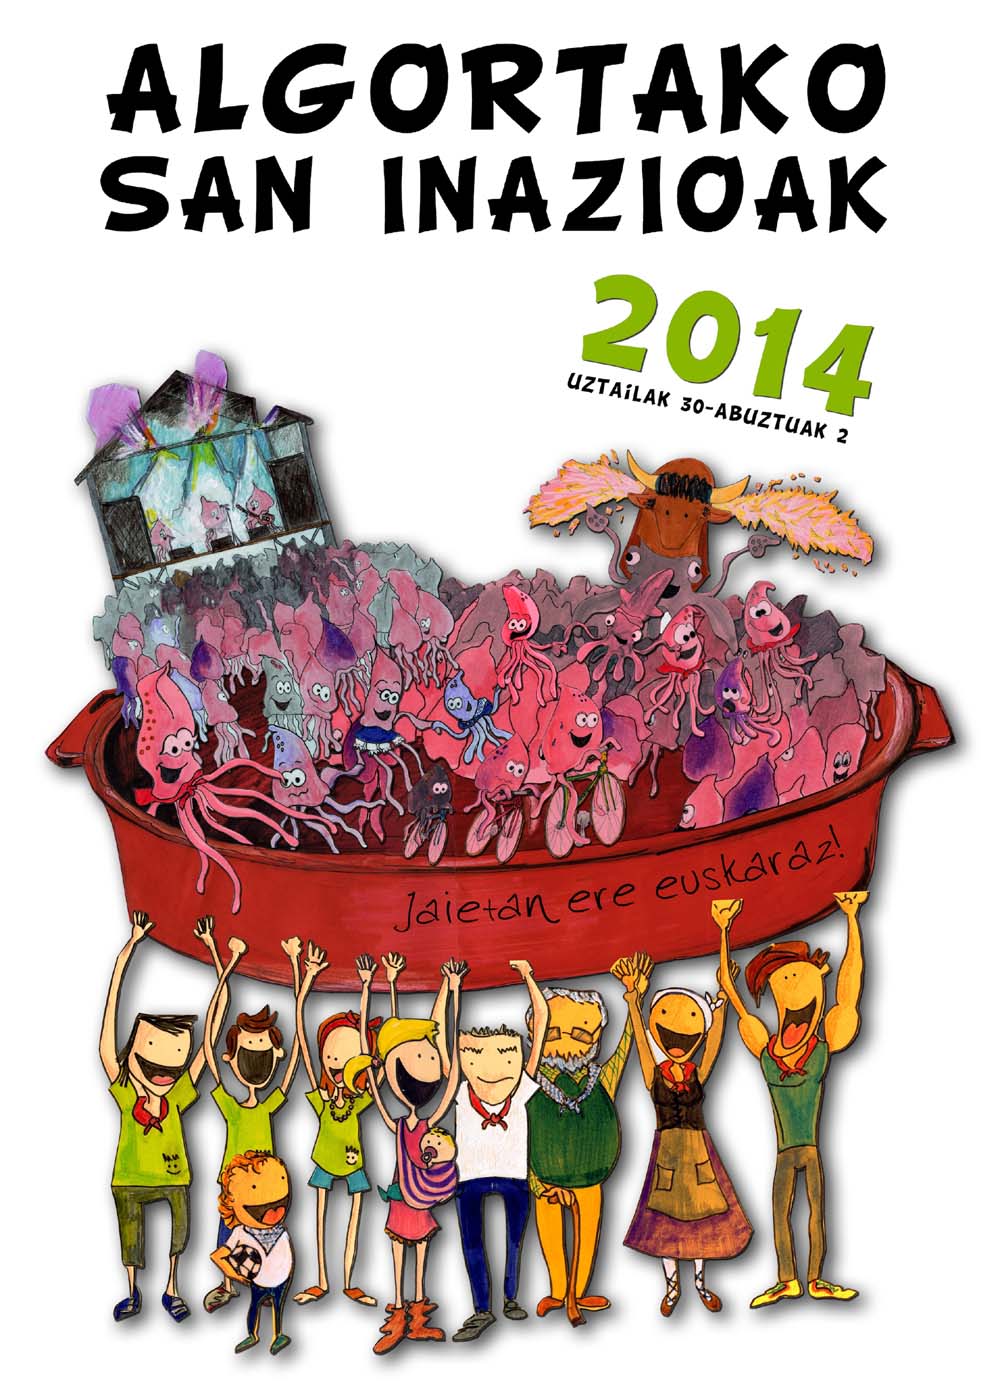 Cartel de las fiestas de Algorta 2014. Foto: Aixerrota jai batzordea